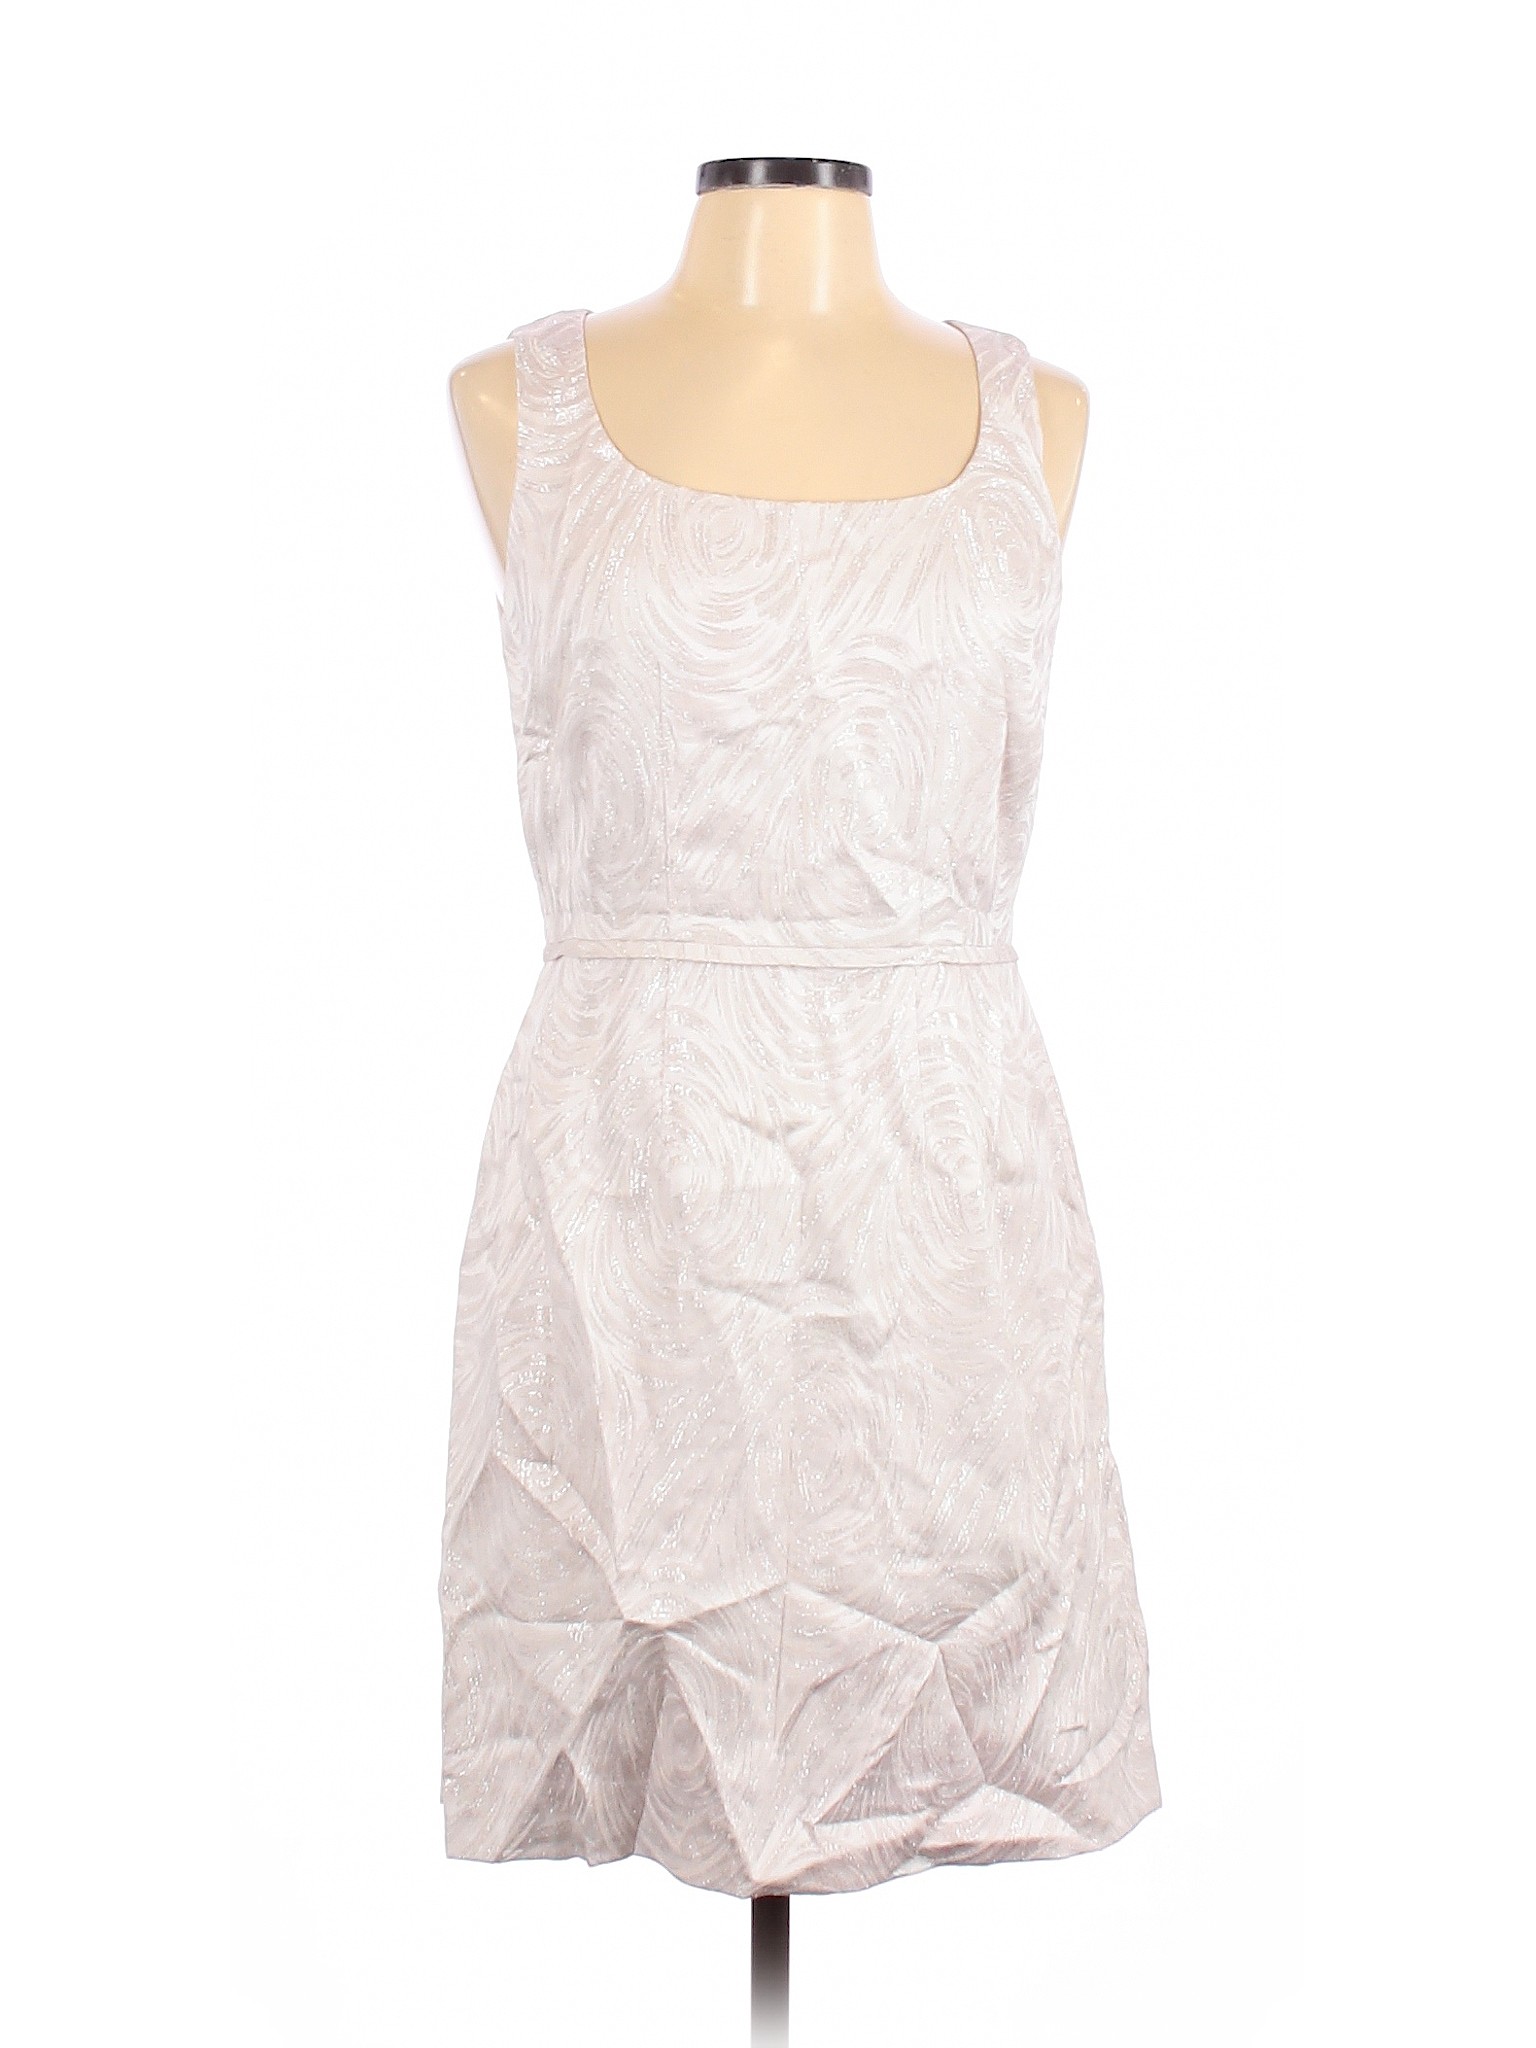 Gianni Bini Women White Cocktail Dress 10 | eBay